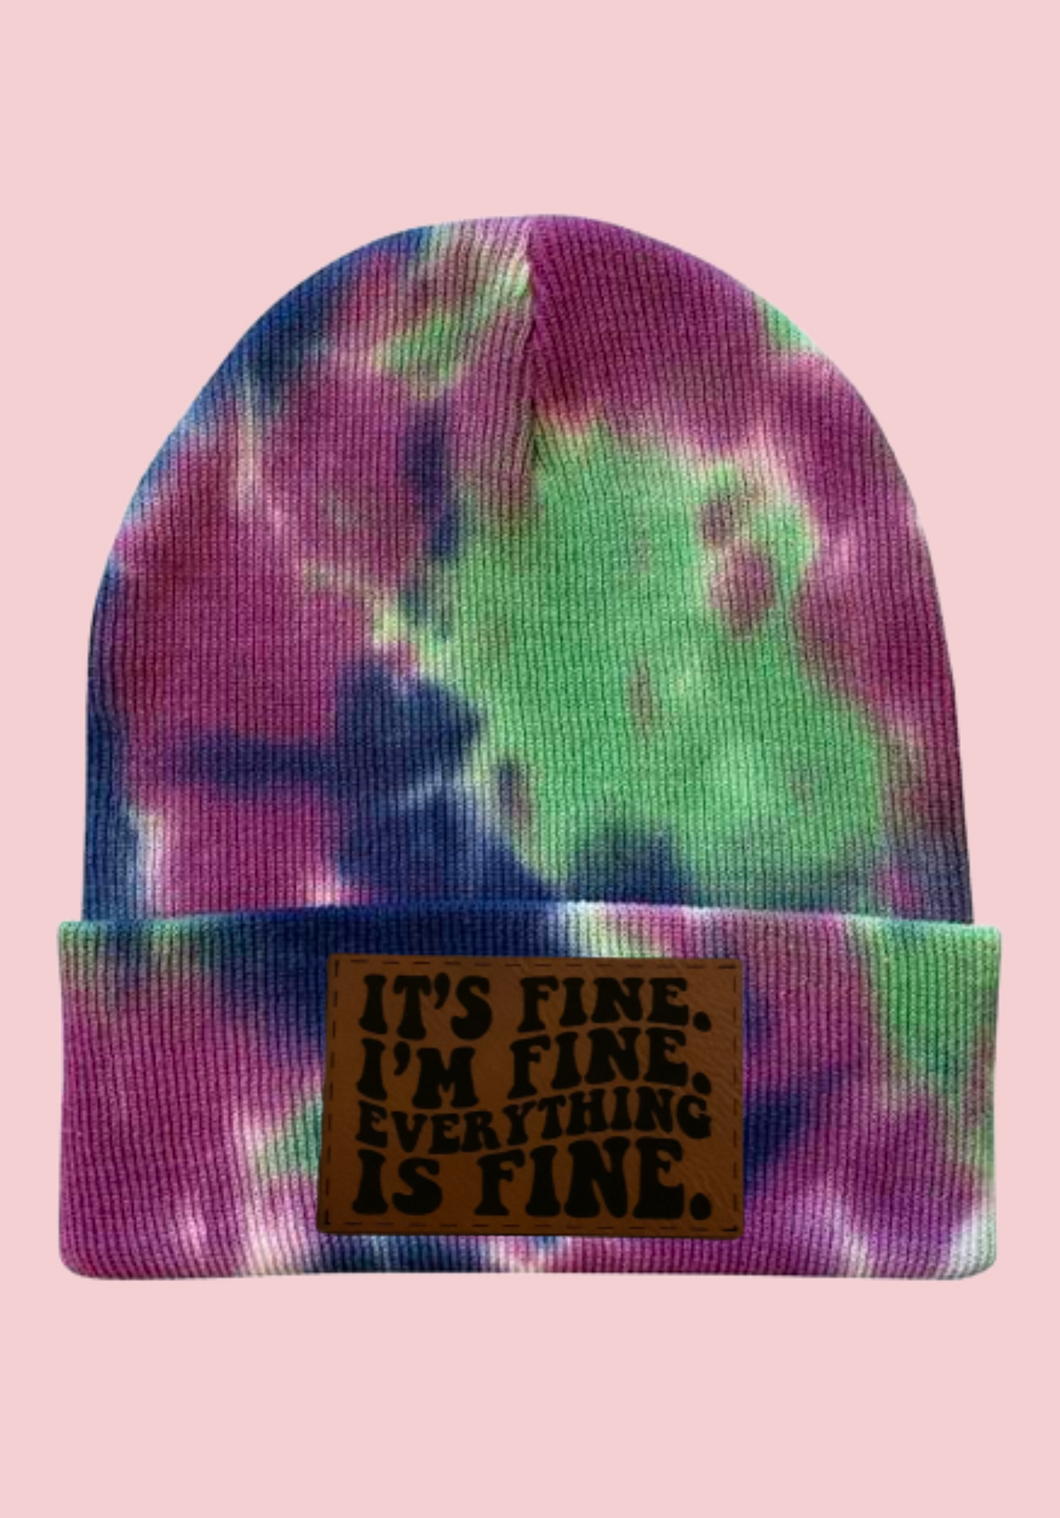 It’s fine, I’m fine, everything is fine hat/beanie